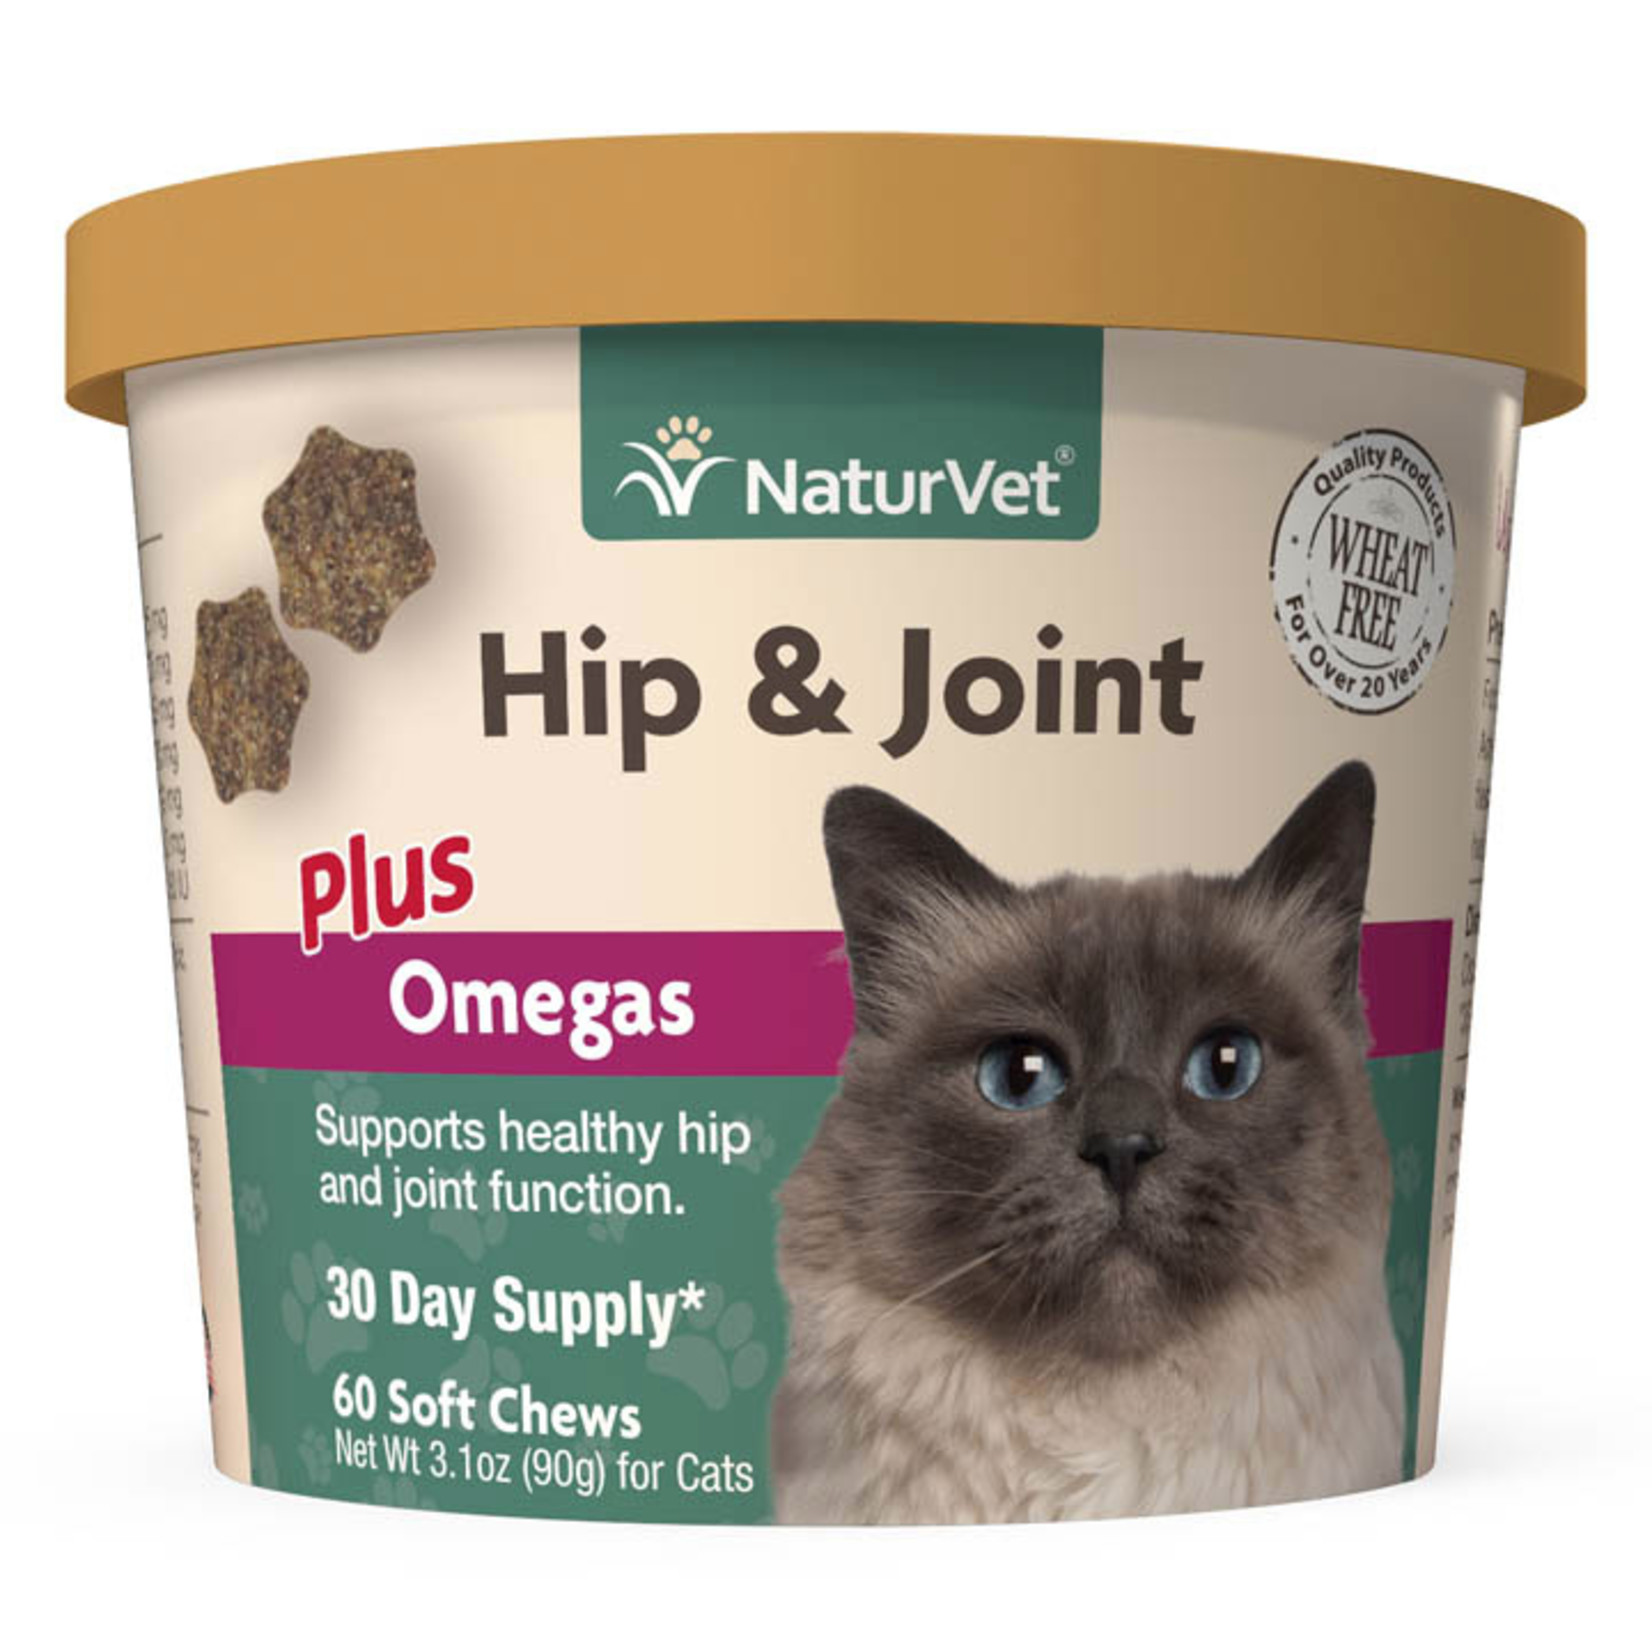 NaturVet NaturVet Hip & Joint Health Soft Chews for Cats Plus Omegas